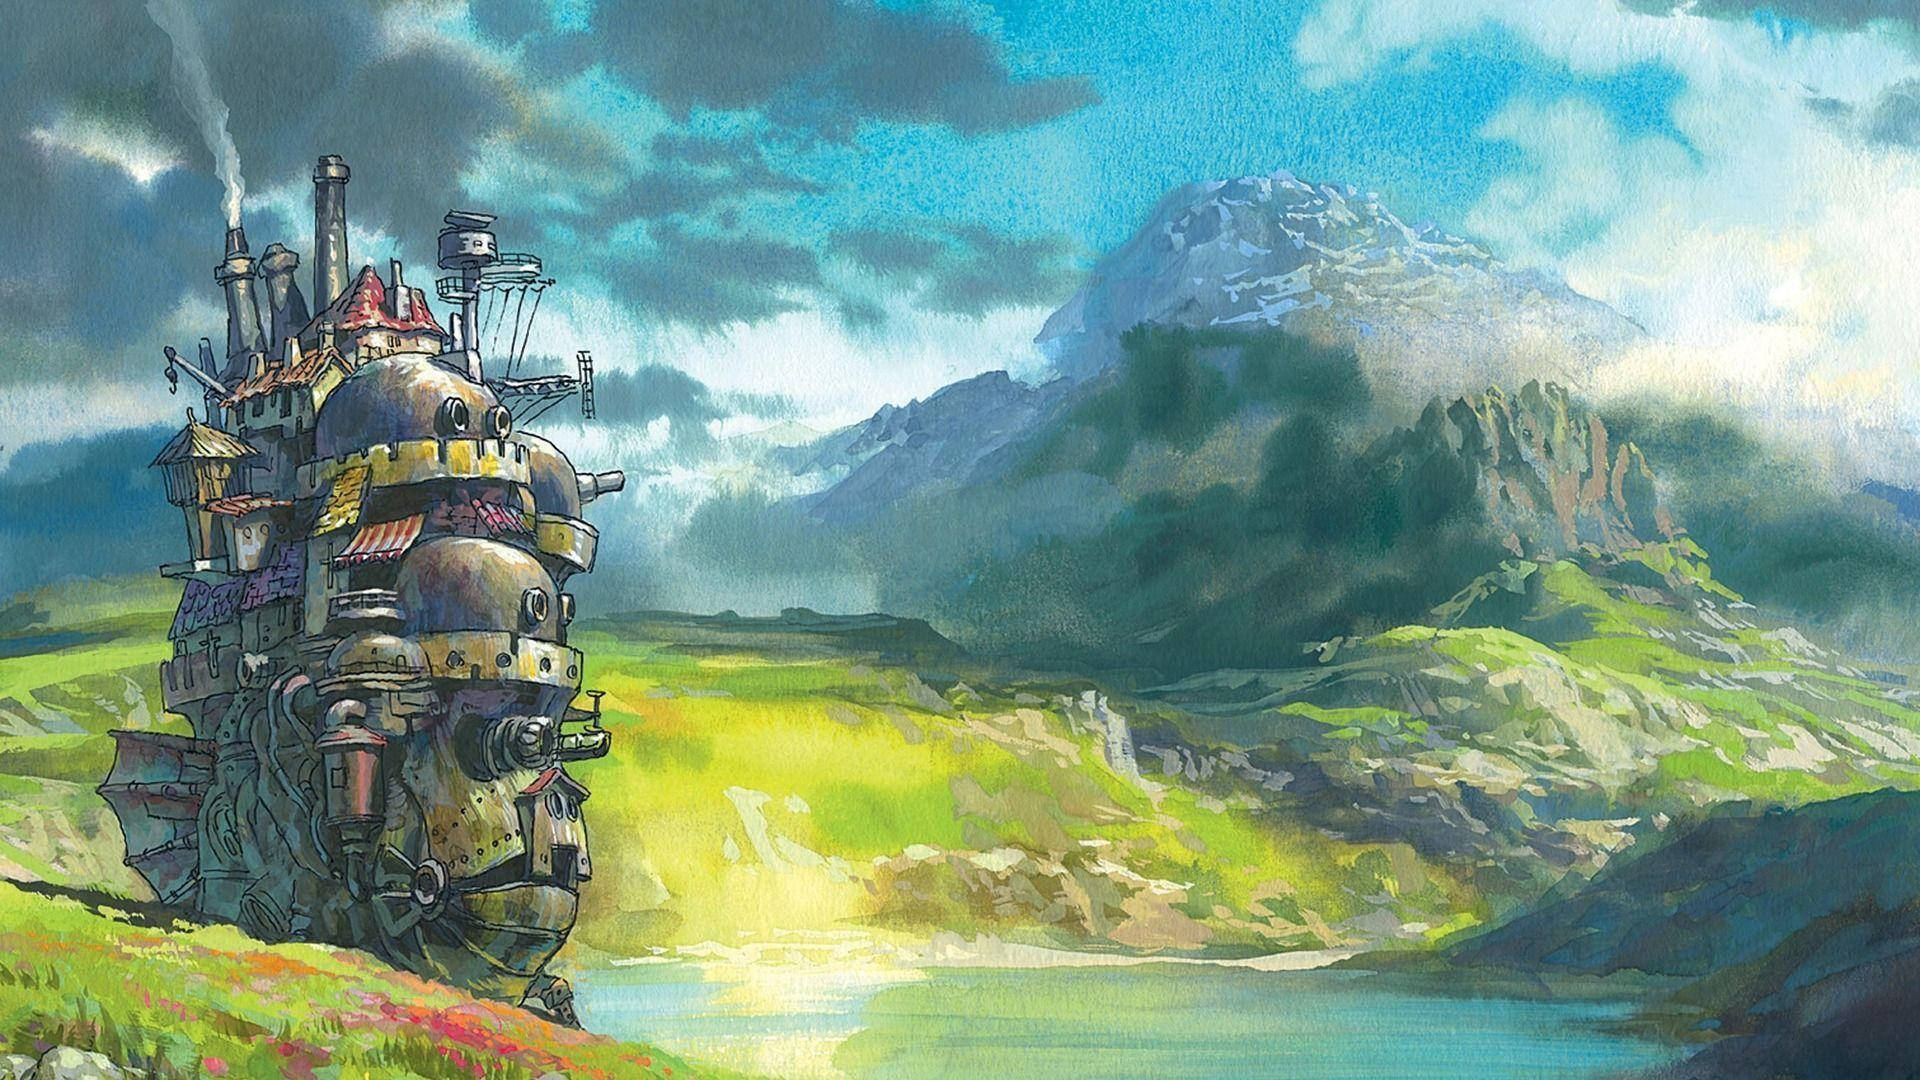 Ghibli Howl's Castle Picture